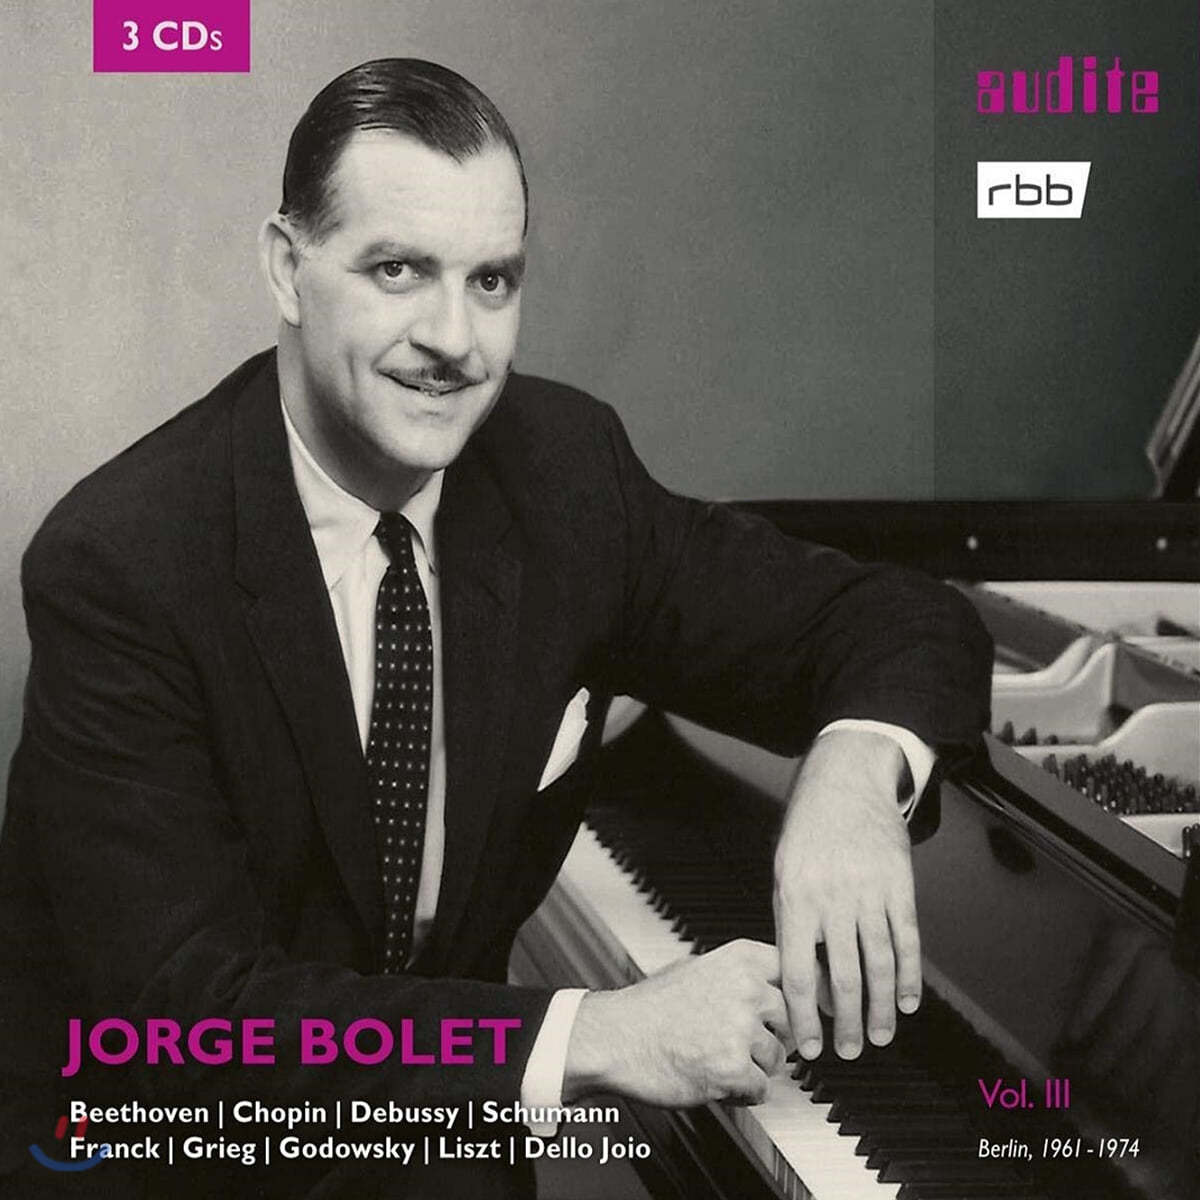 Jorge Bolet 호르헤 볼레 RIAS 레코딩 3집 (Berlin Radio Recordings Vol. 3)